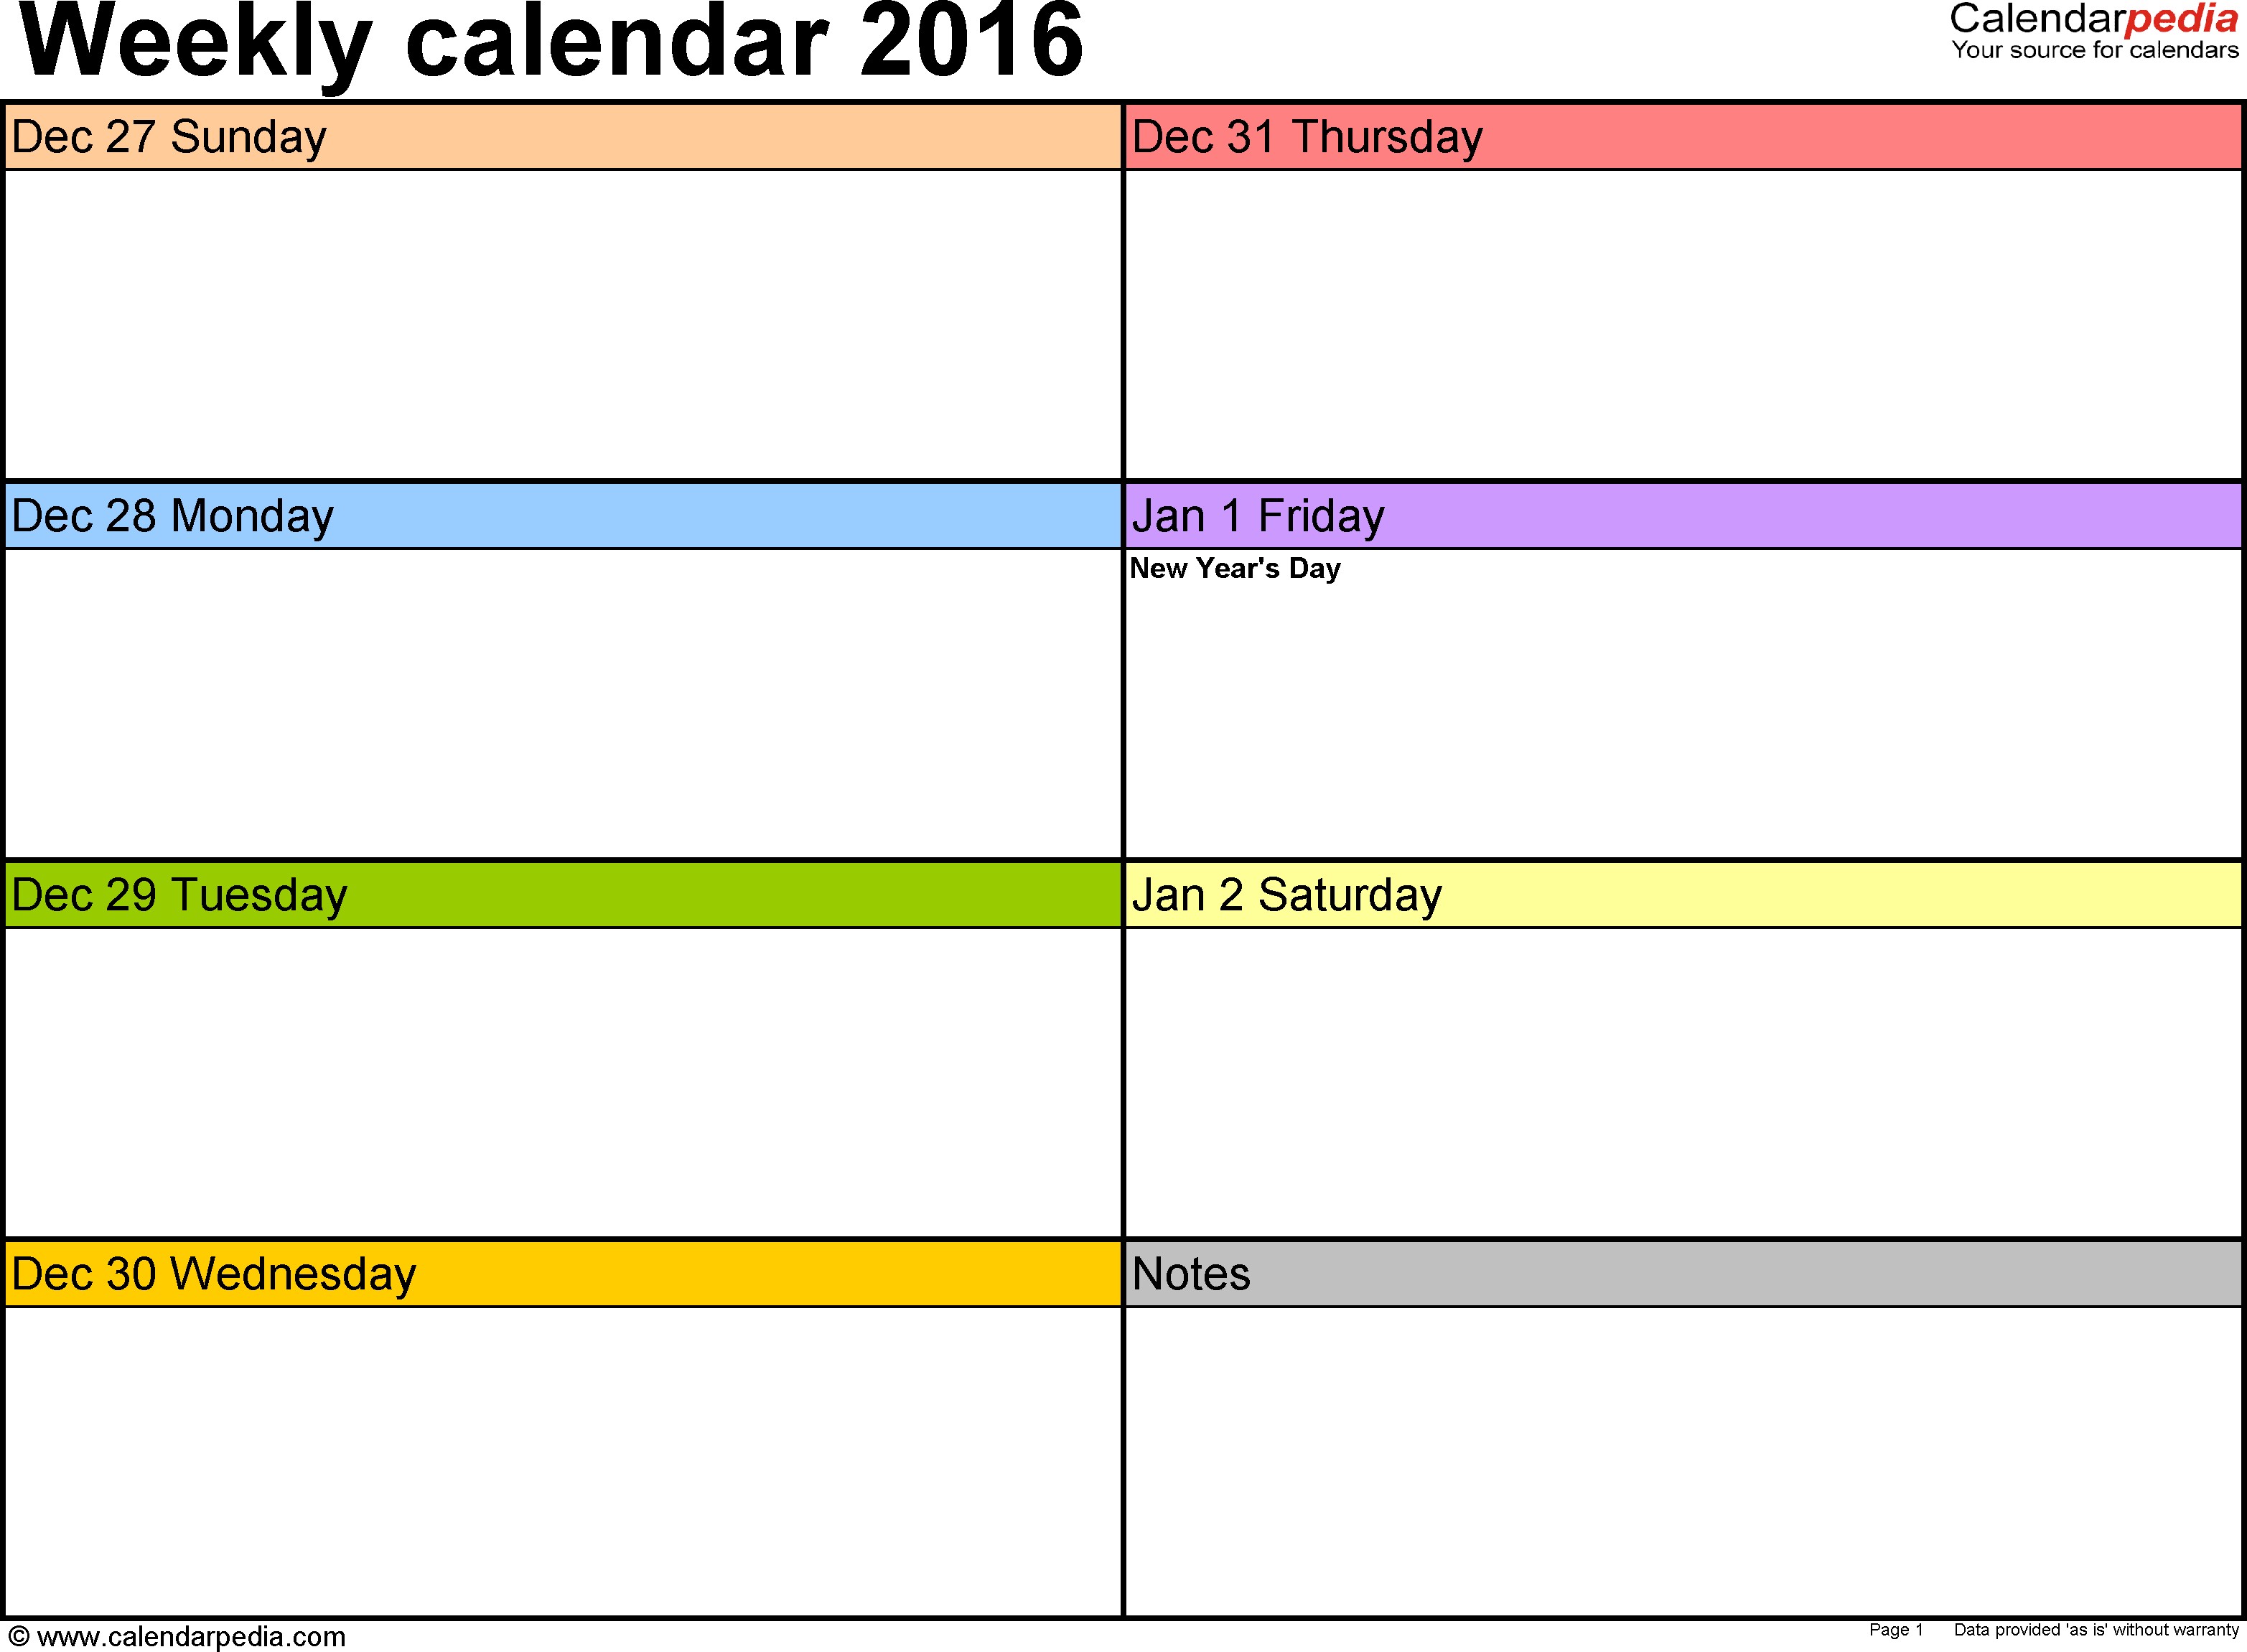 Weekly calendar 2016 for PDF 12 free printable templates